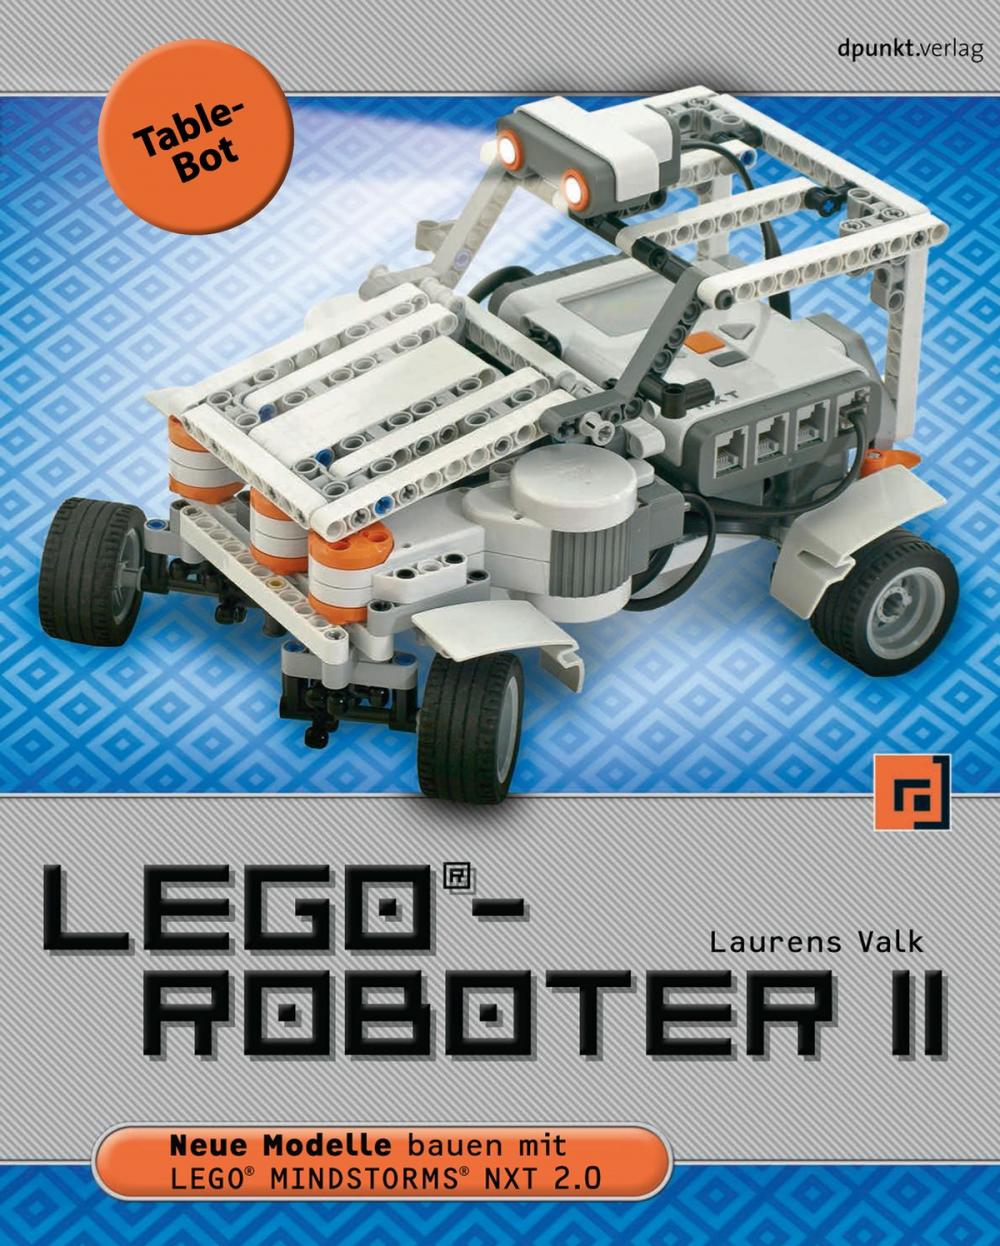 Big bigCover of LEGO®-Roboter II - Table-Bot